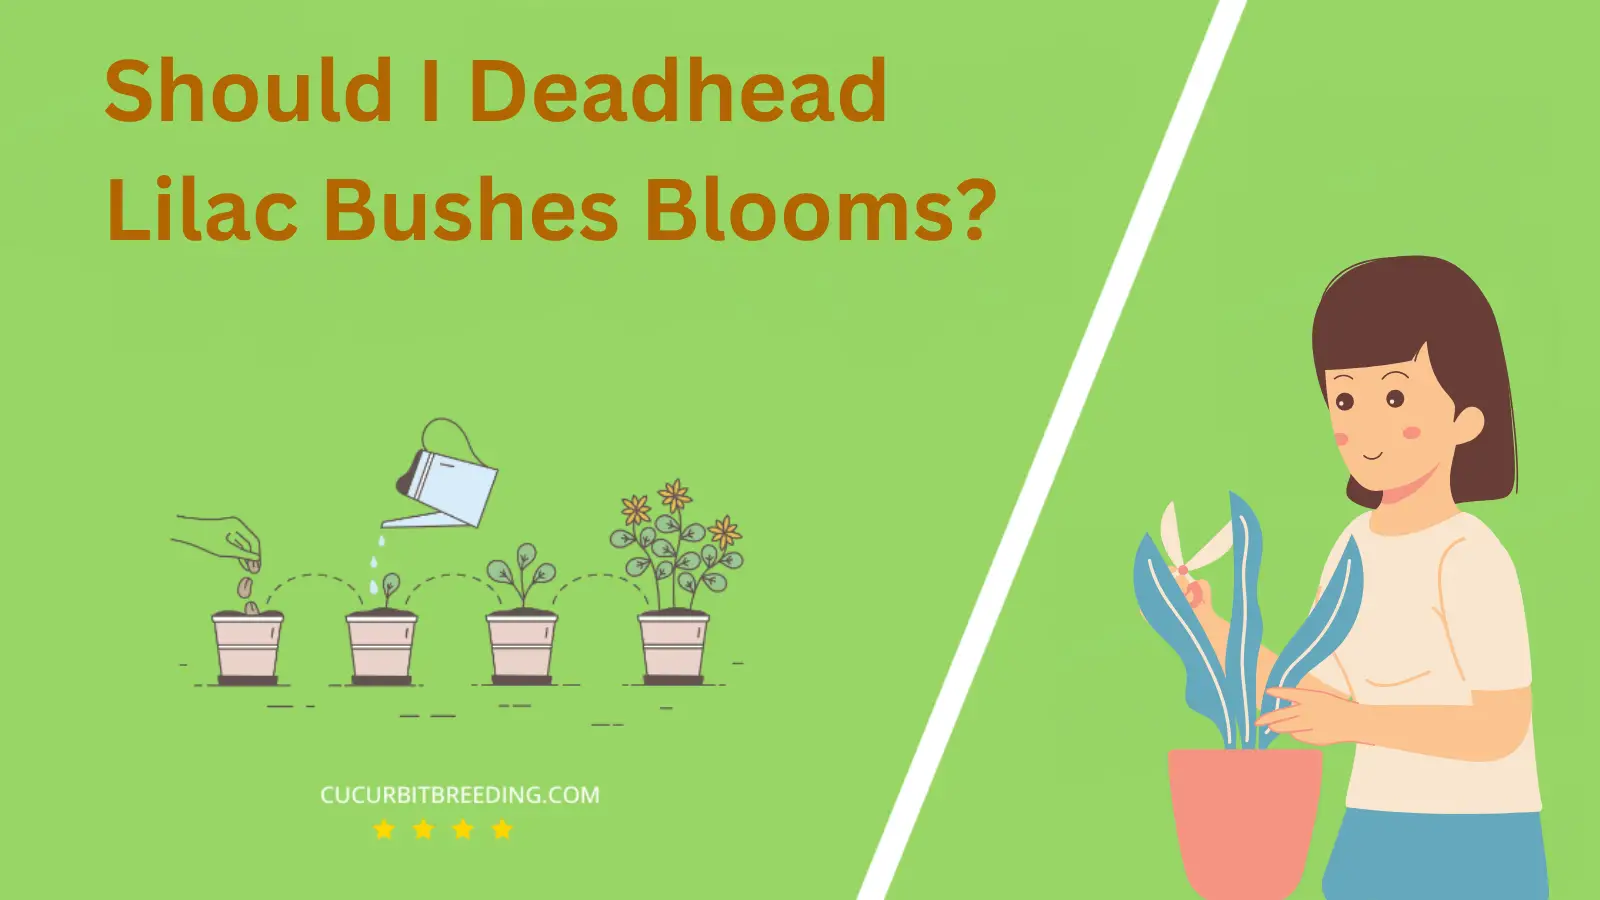 Should I Deadhead Lilac Bushes Blooms?